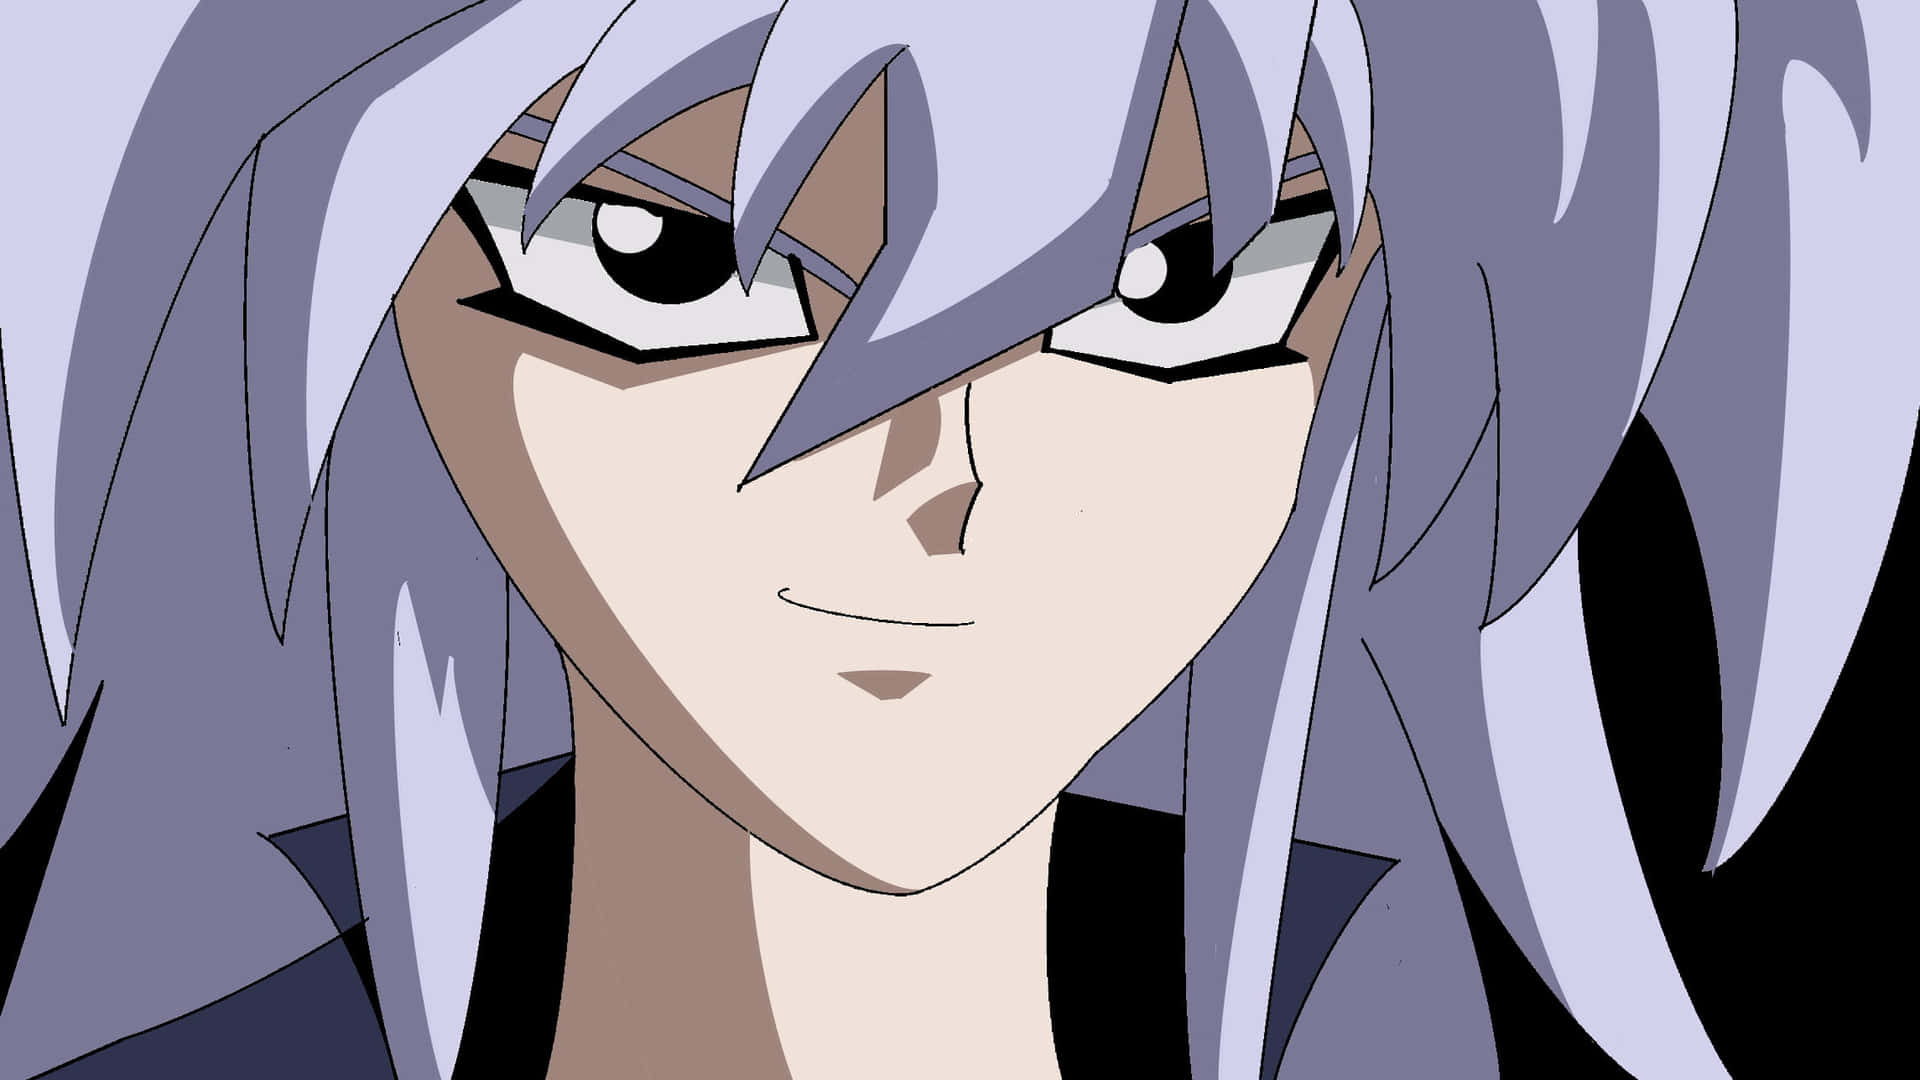 Yami Bakura smirking with an evil look in his eyes Wallpaper